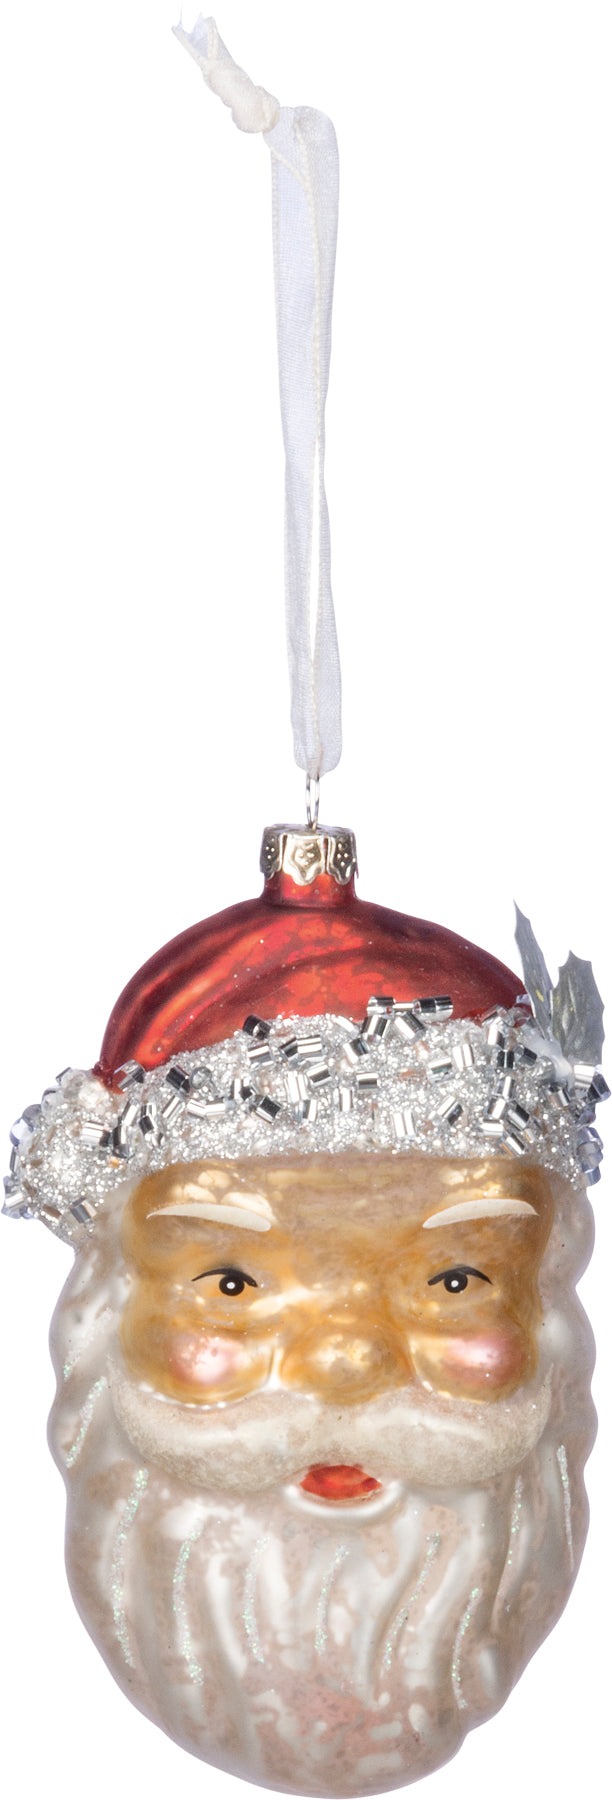 Vintage Styled Glass Face Santa Ornament